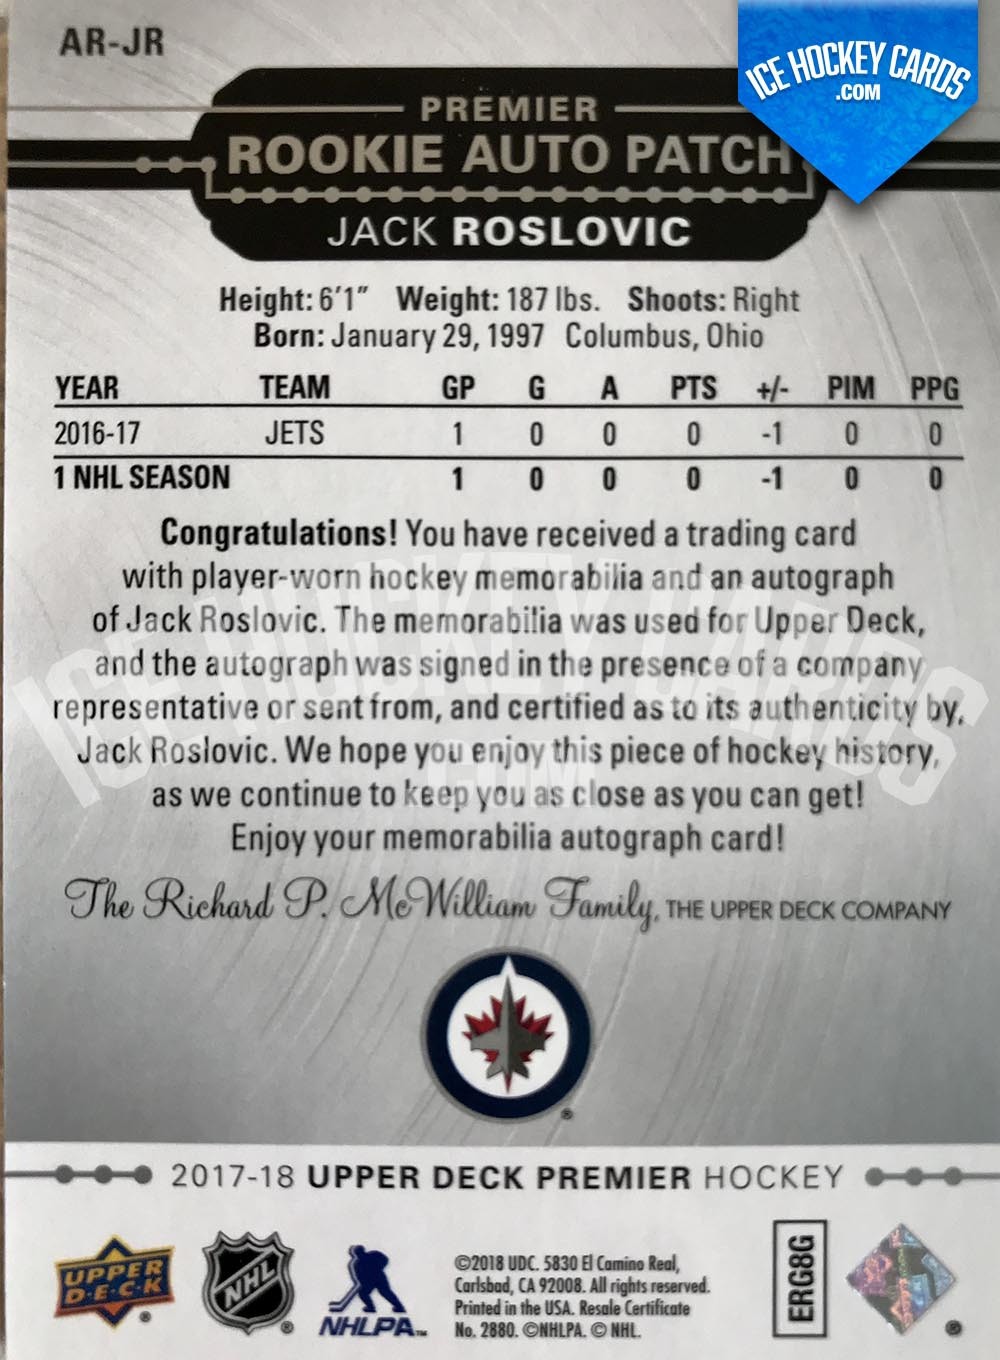 Upper Deck - Premier Hockey 2017-18 - Jack Roslovic Premier Rookie Auto Patch - 'JETS' back